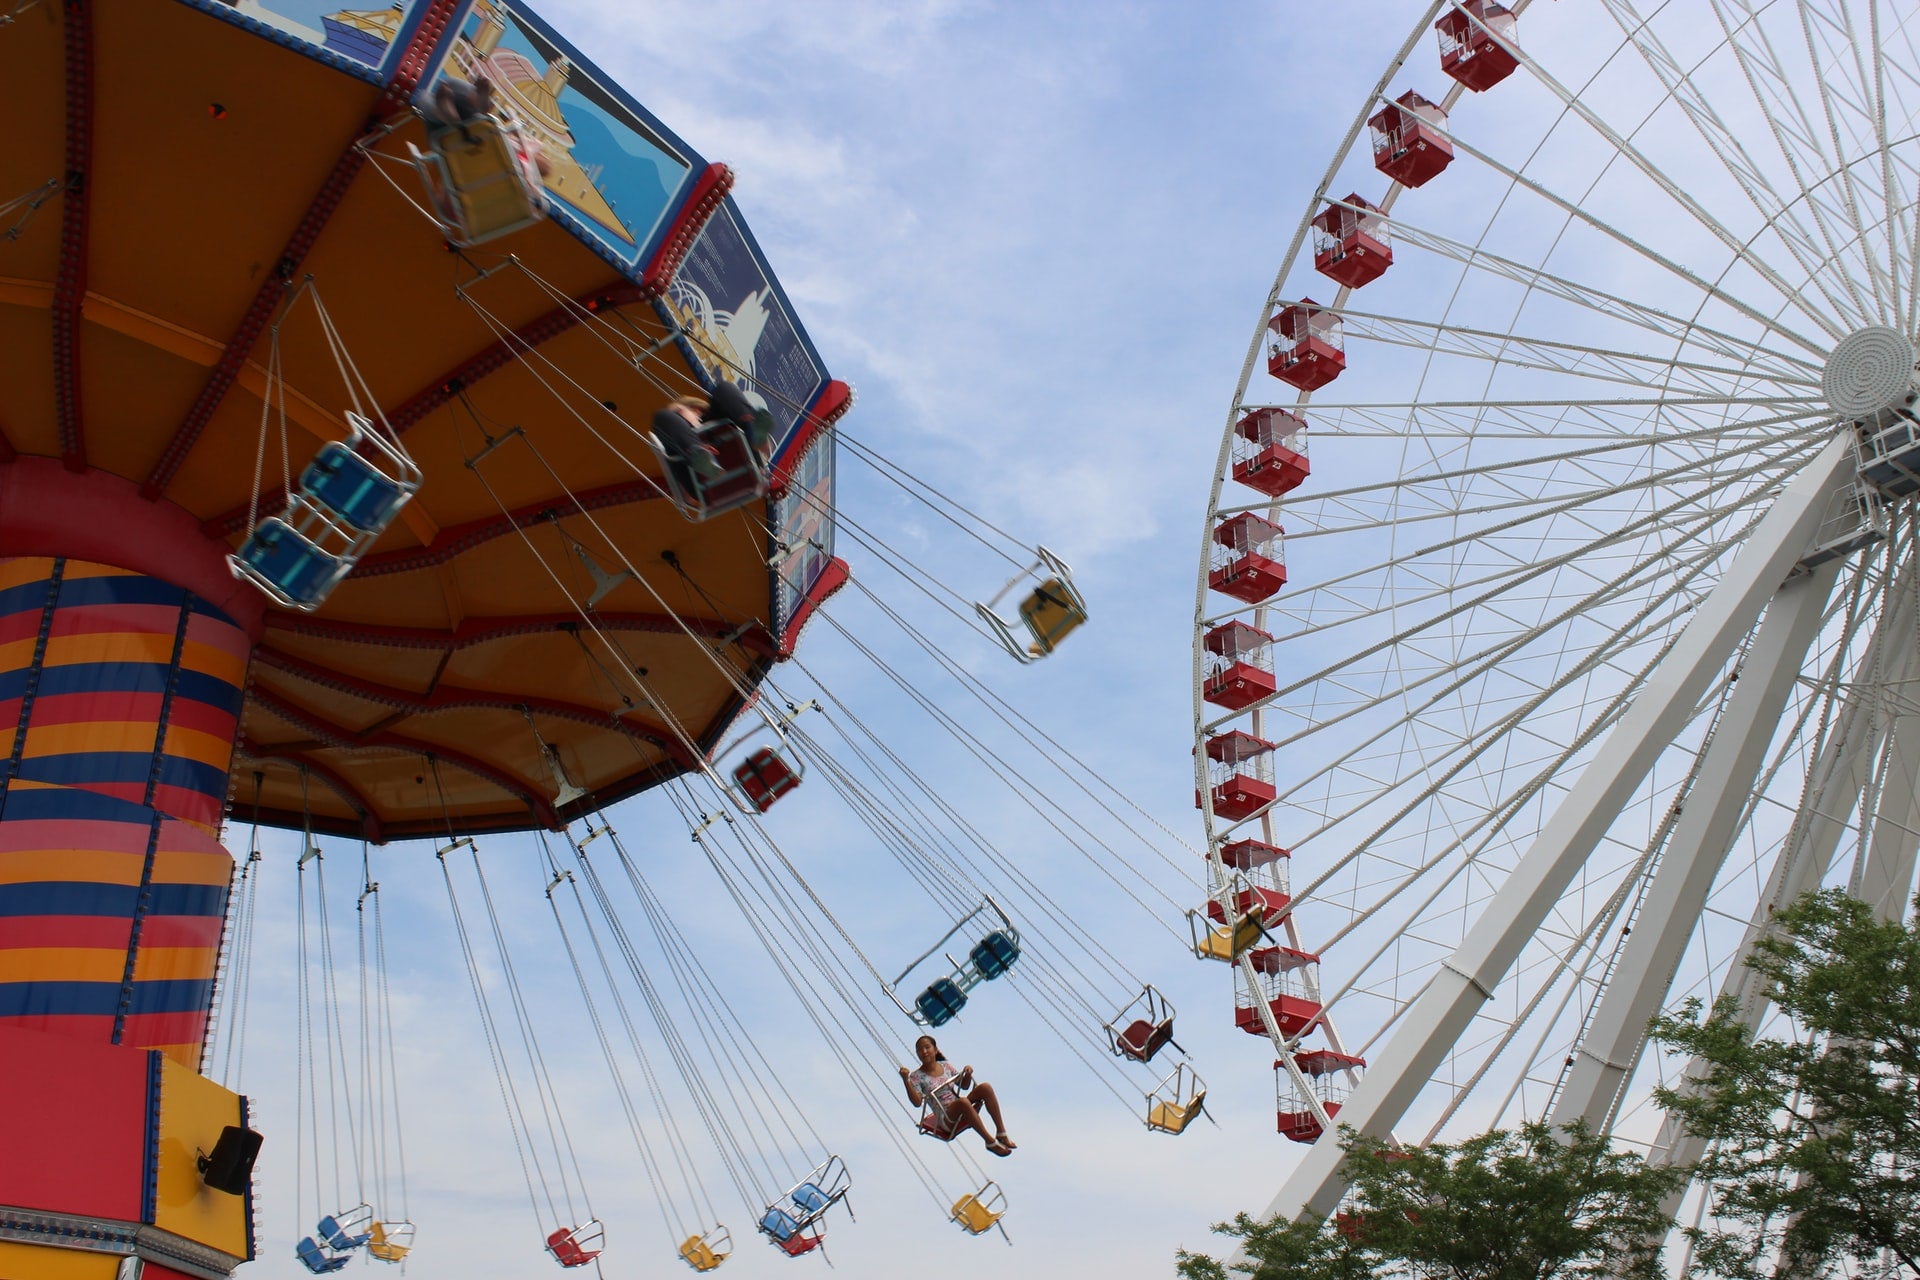 Navy Pier Swing and Ferris Wheel Image Credit Melissa Askew via Unsplash